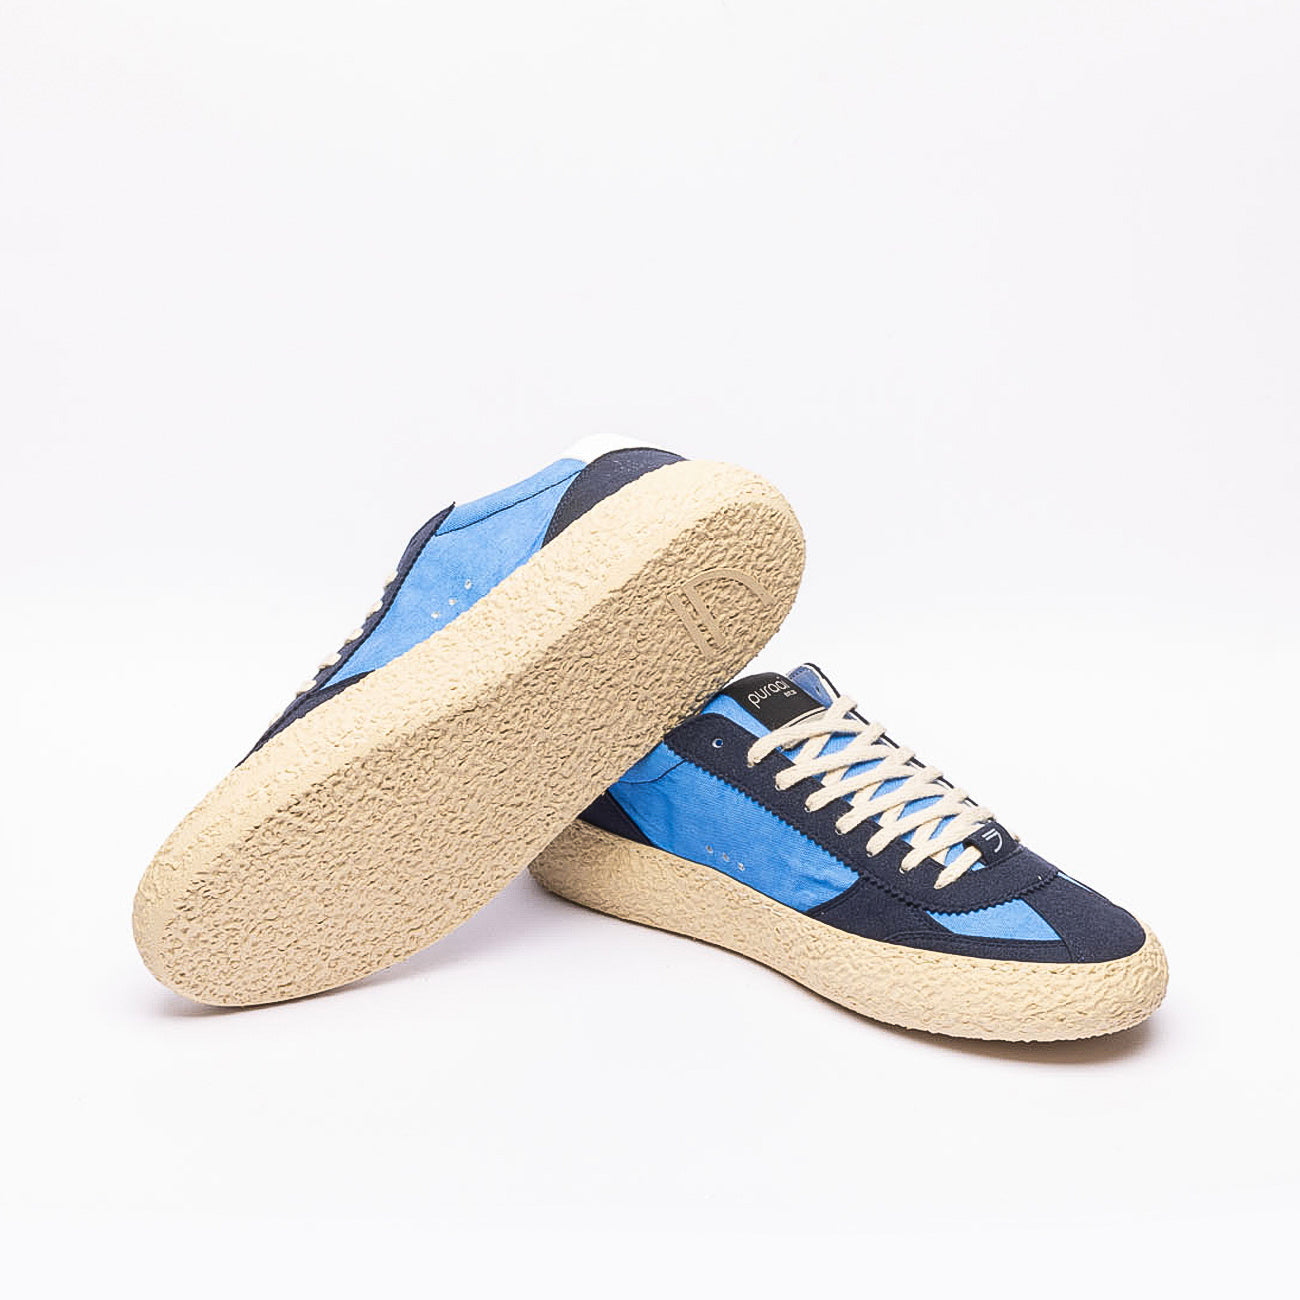 Sneaker Puraai 1.01 Vintage Flip in tessuto azzurro e camoscio blu